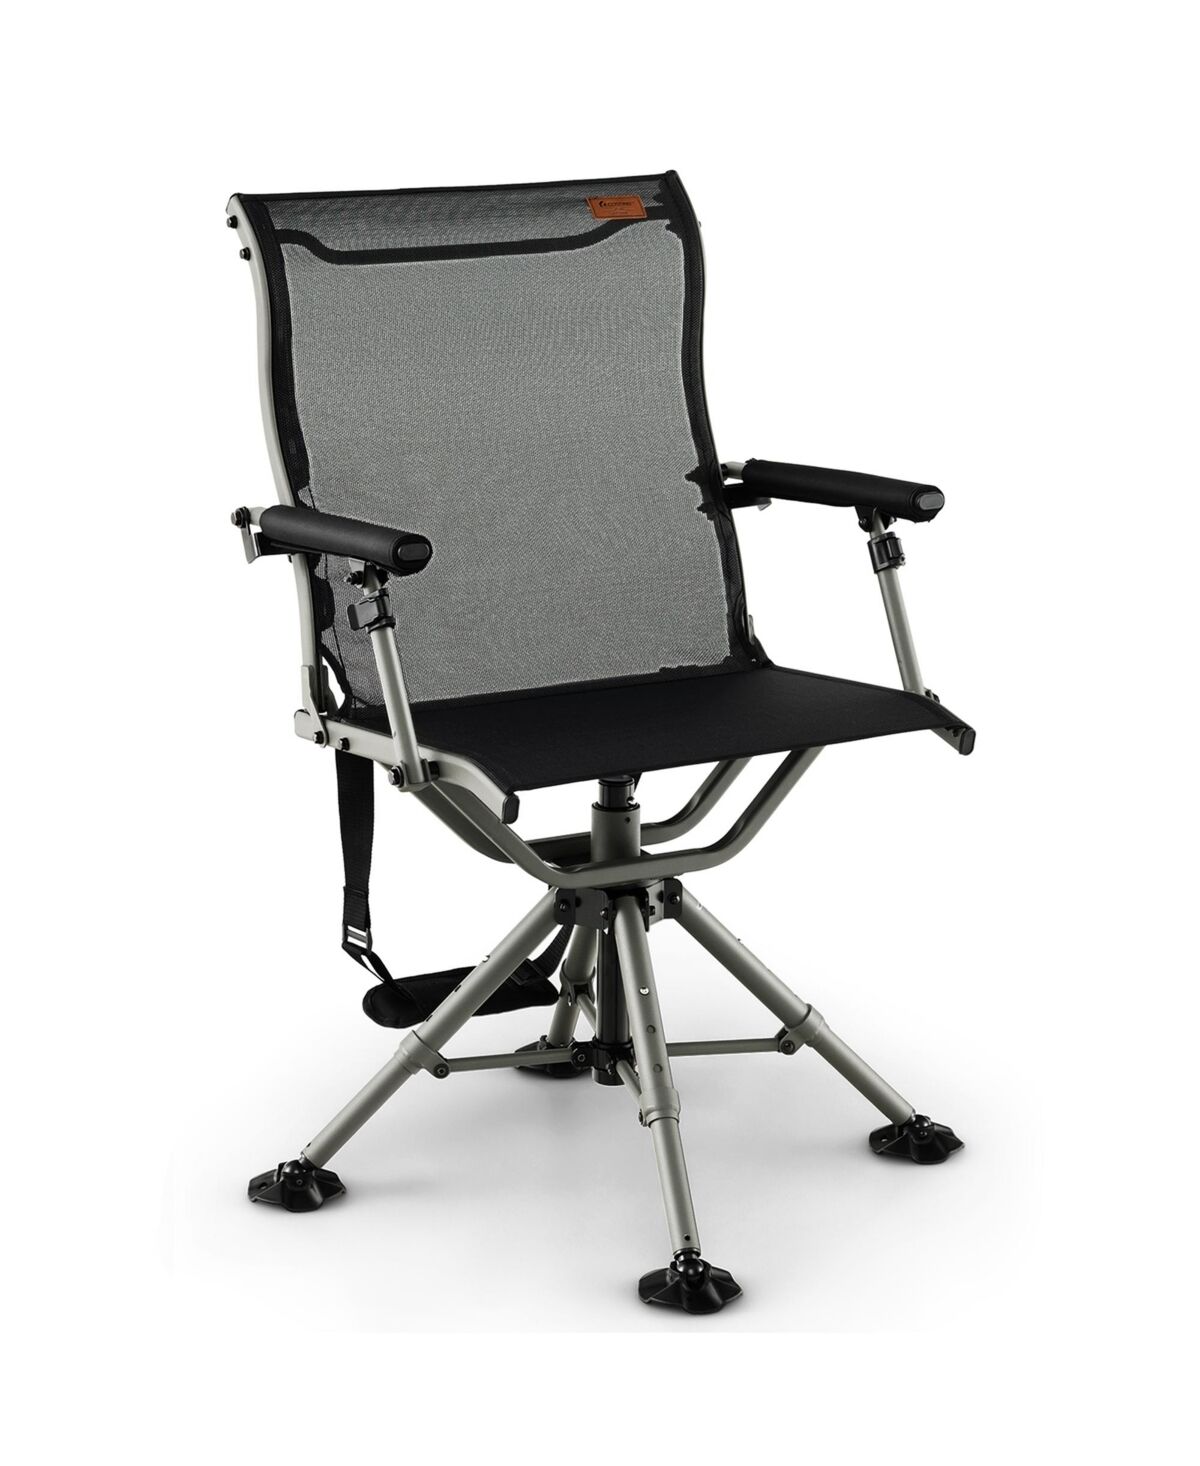 Costway 360 Degree Silent Swivel Hunting Chair w/ All-terrain Feet Pads Support 400 Lbs - Black